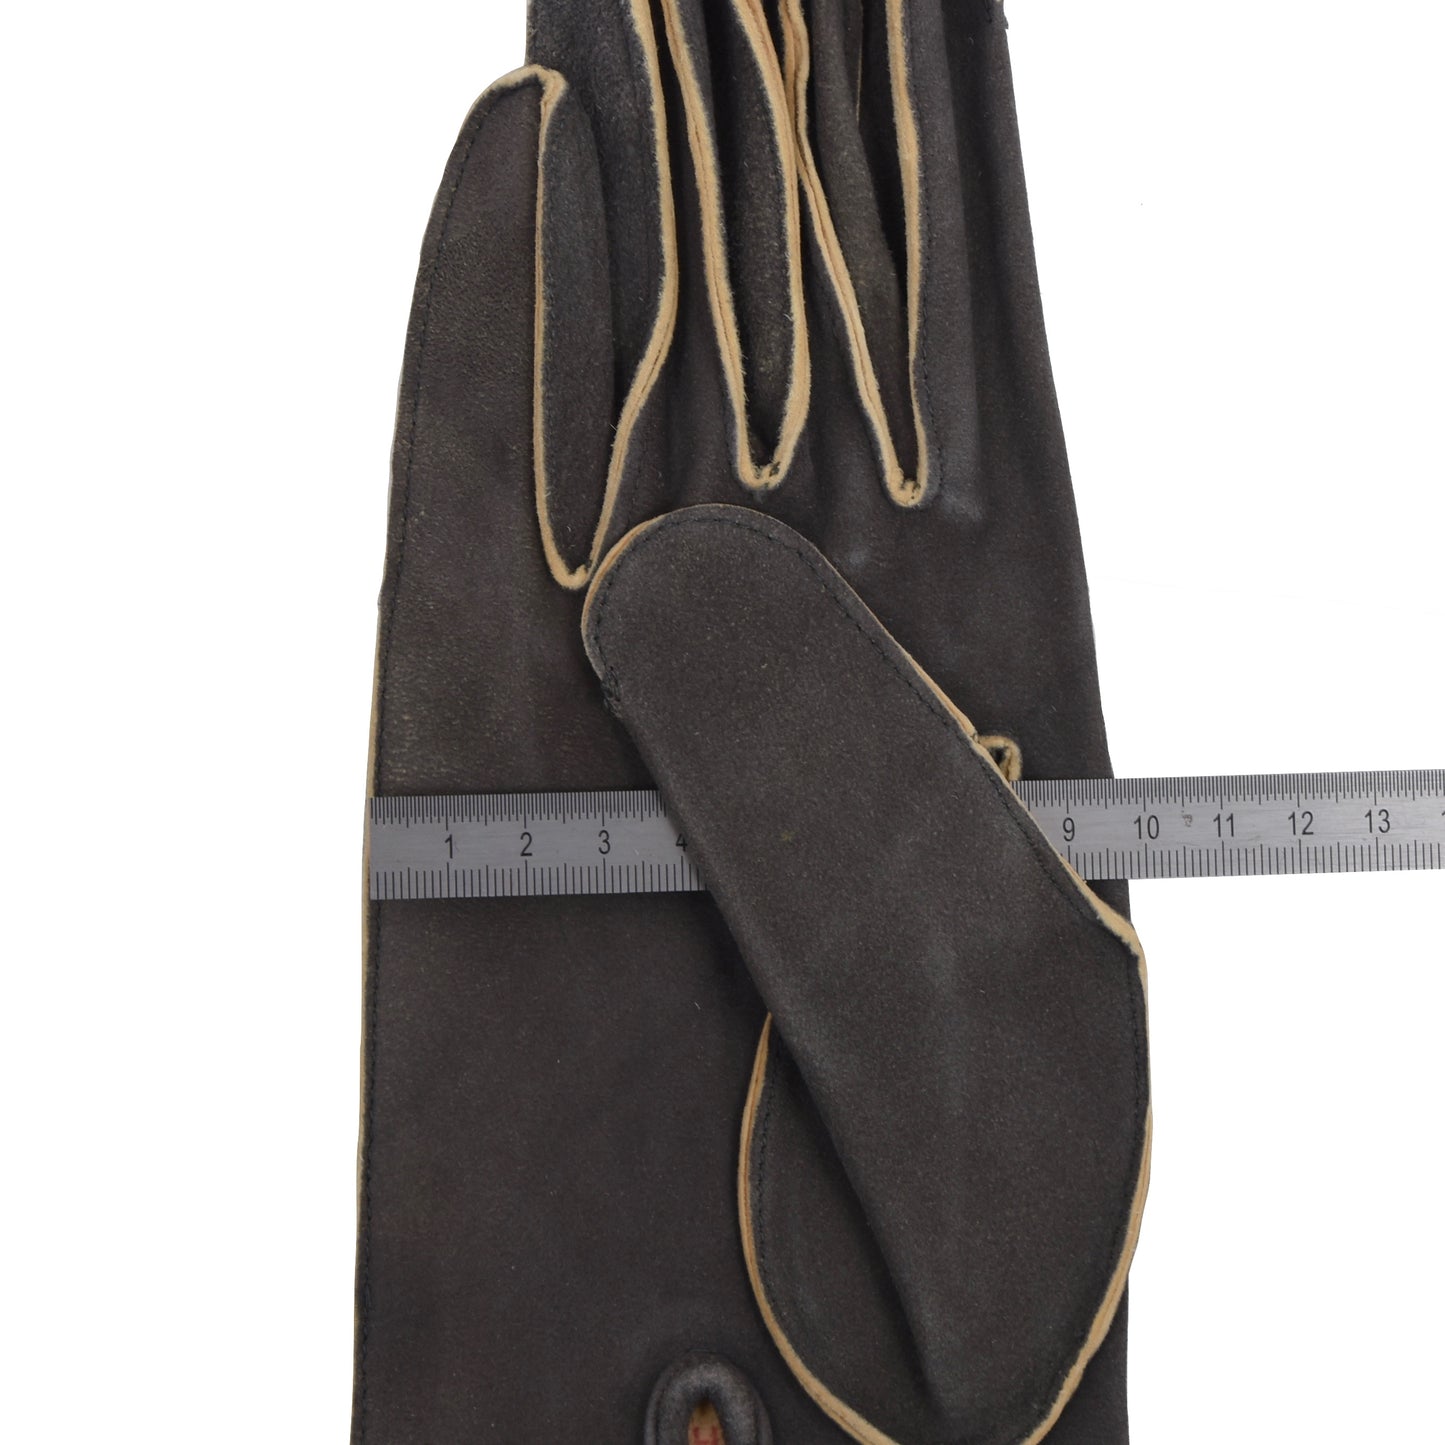 Handschuhpeter Wien Doeskin Gloves Size 8.5 - Grey